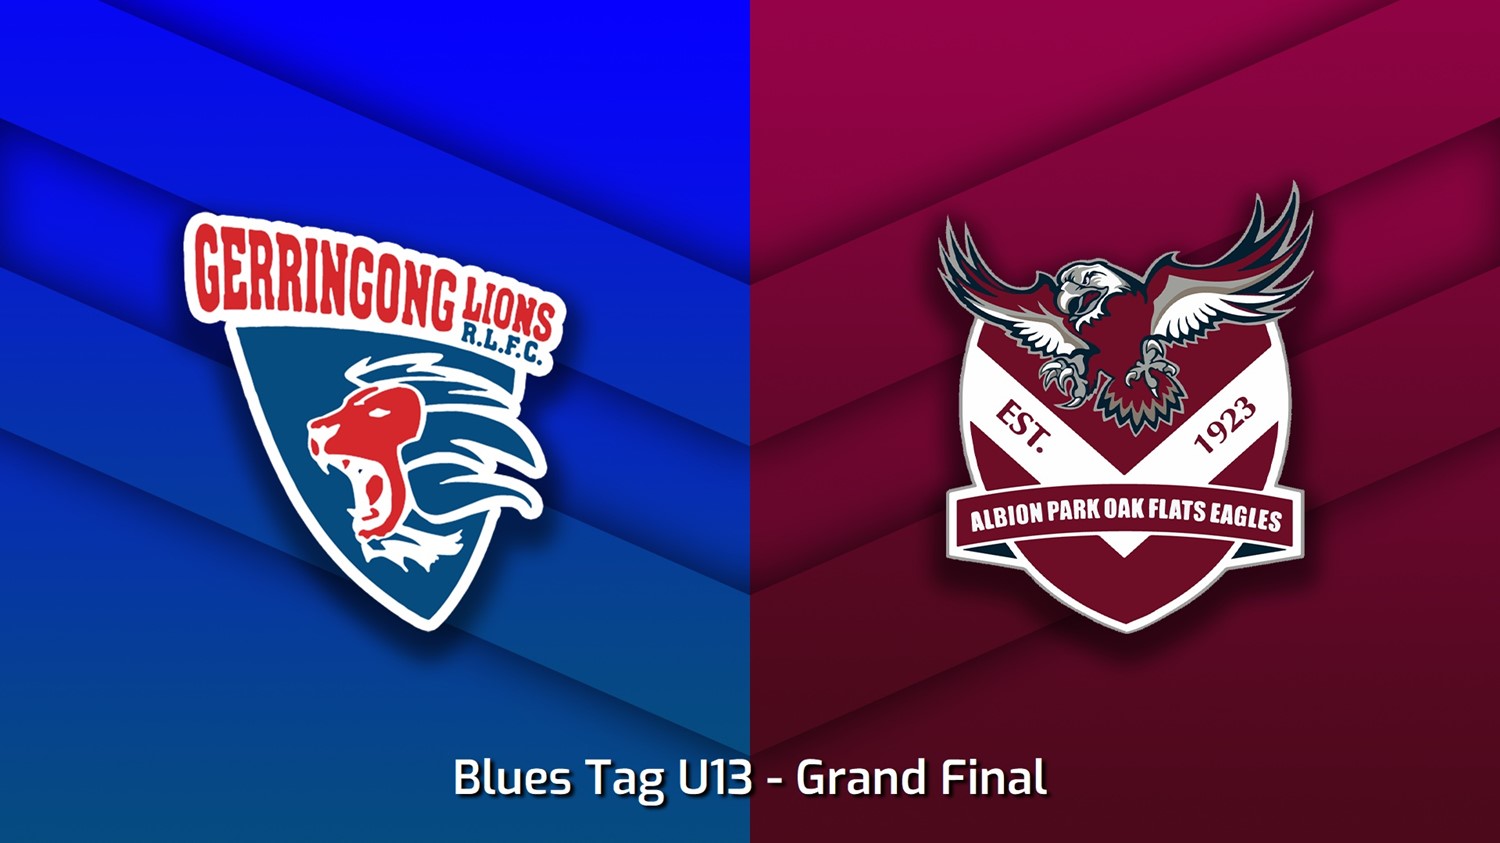 230826-South Coast Juniors Grand Final - Blues Tag U13 - Gerringong Lions v Albion Park Oak Flats Eagles Slate Image